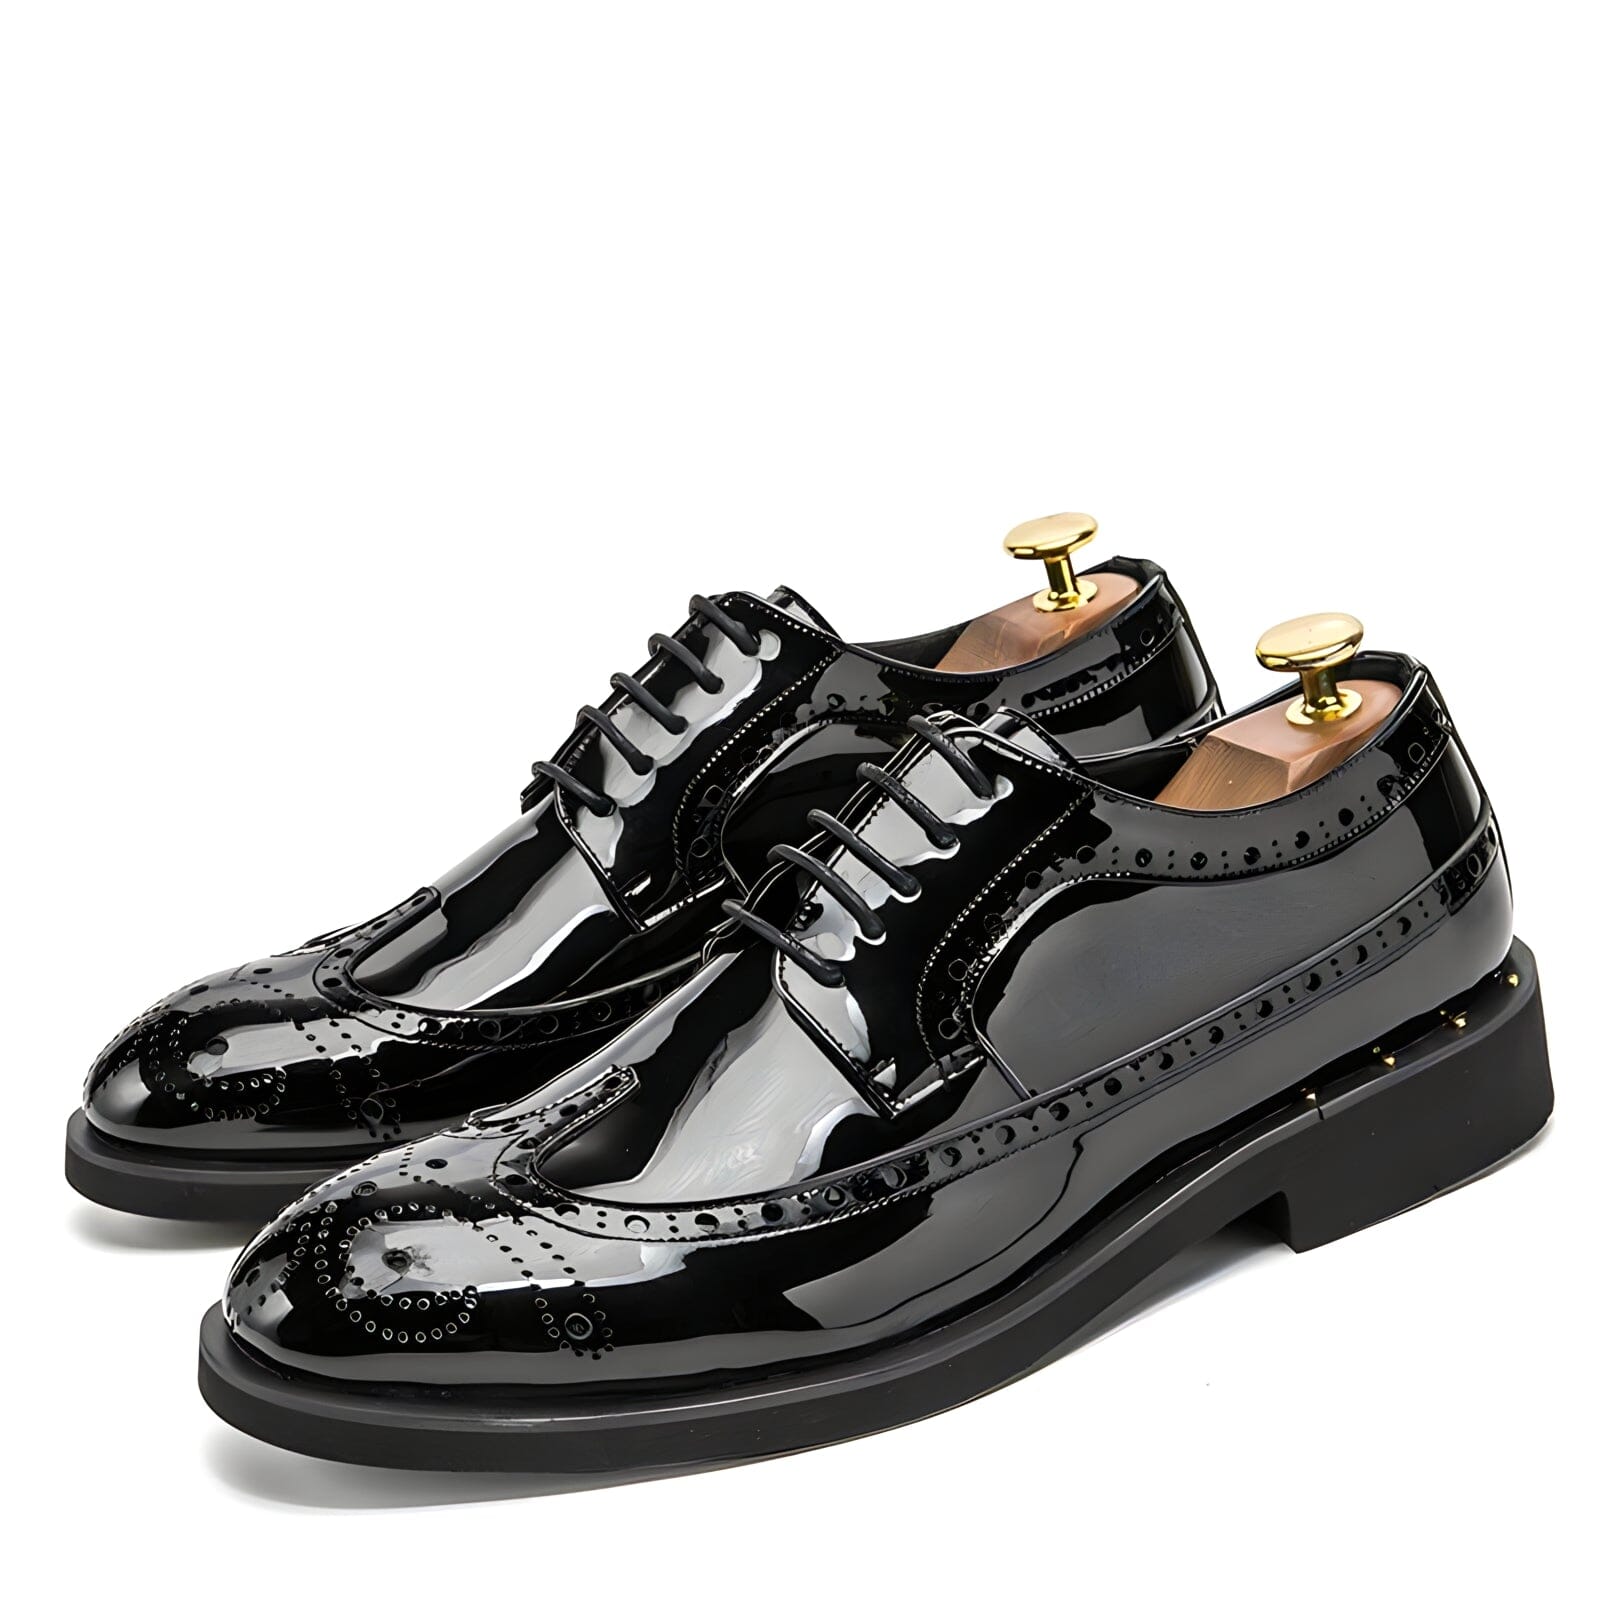 The Manchester Patent Leather Oxford Dress Shoes - Multiple Colors Shop5798684 Store Black US 7 / EU 39 